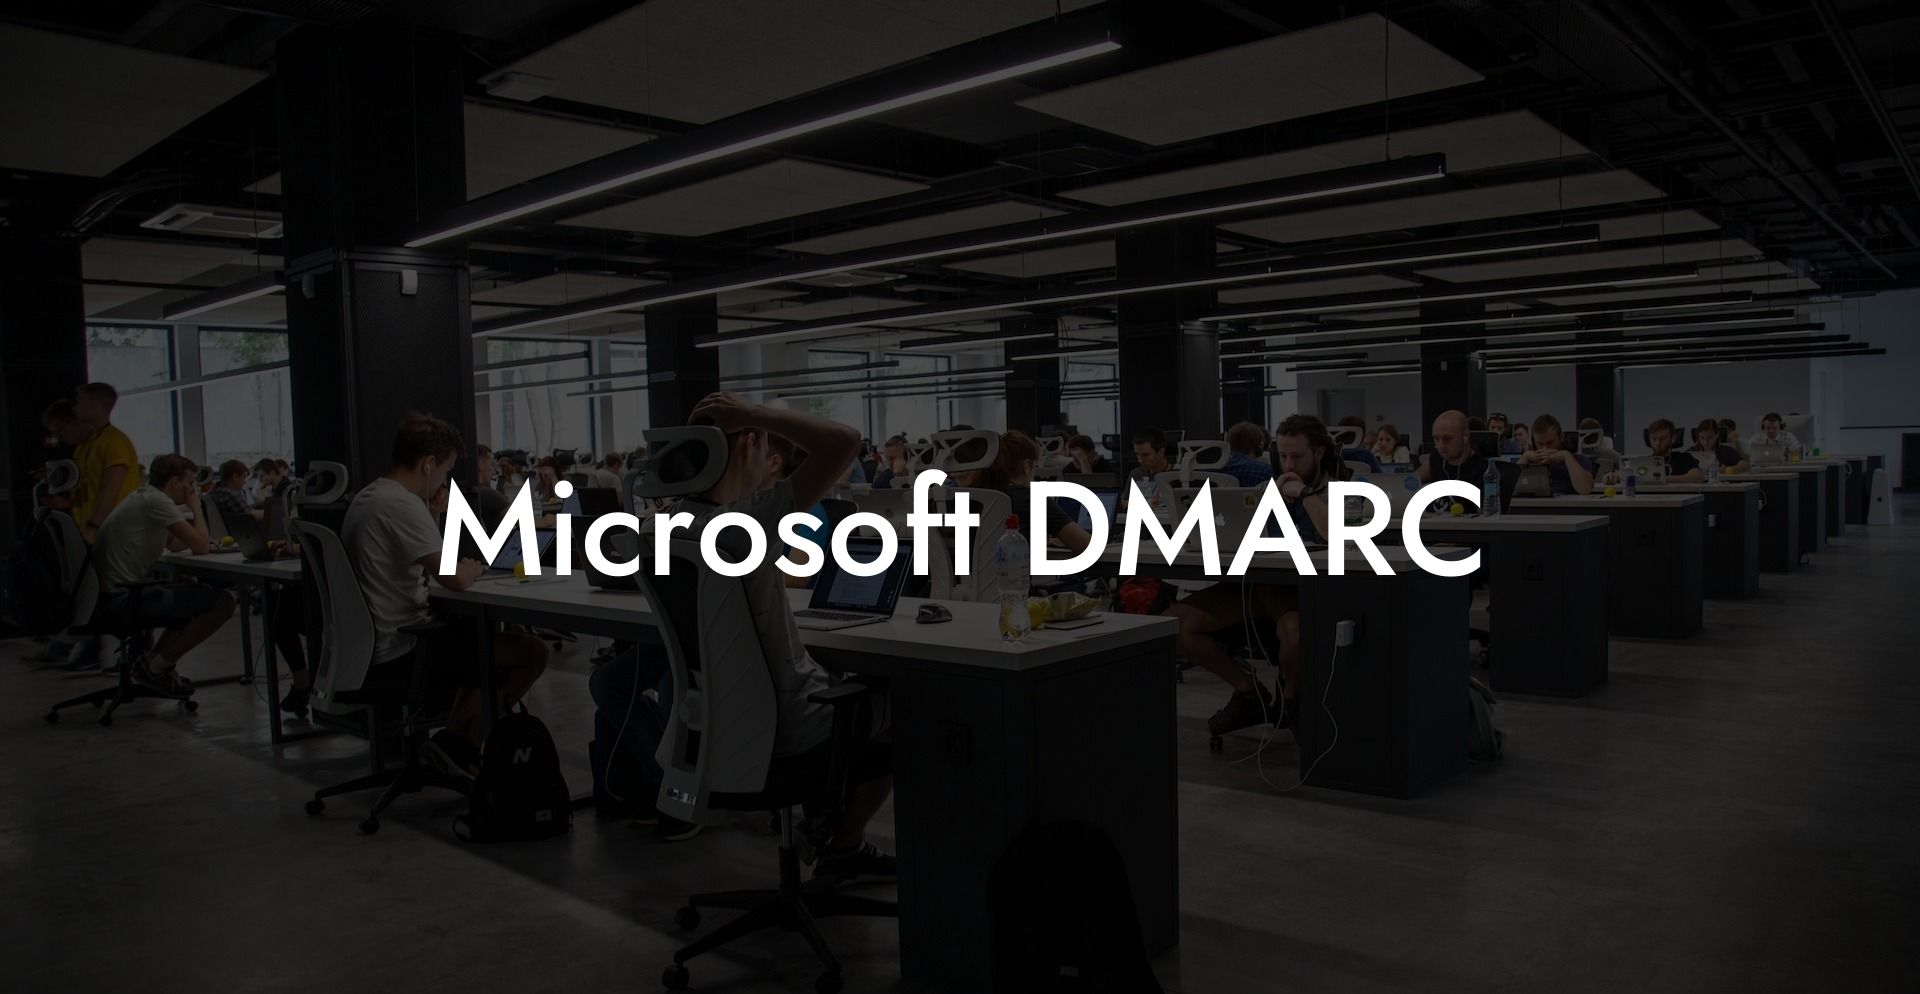 Microsoft DMARC